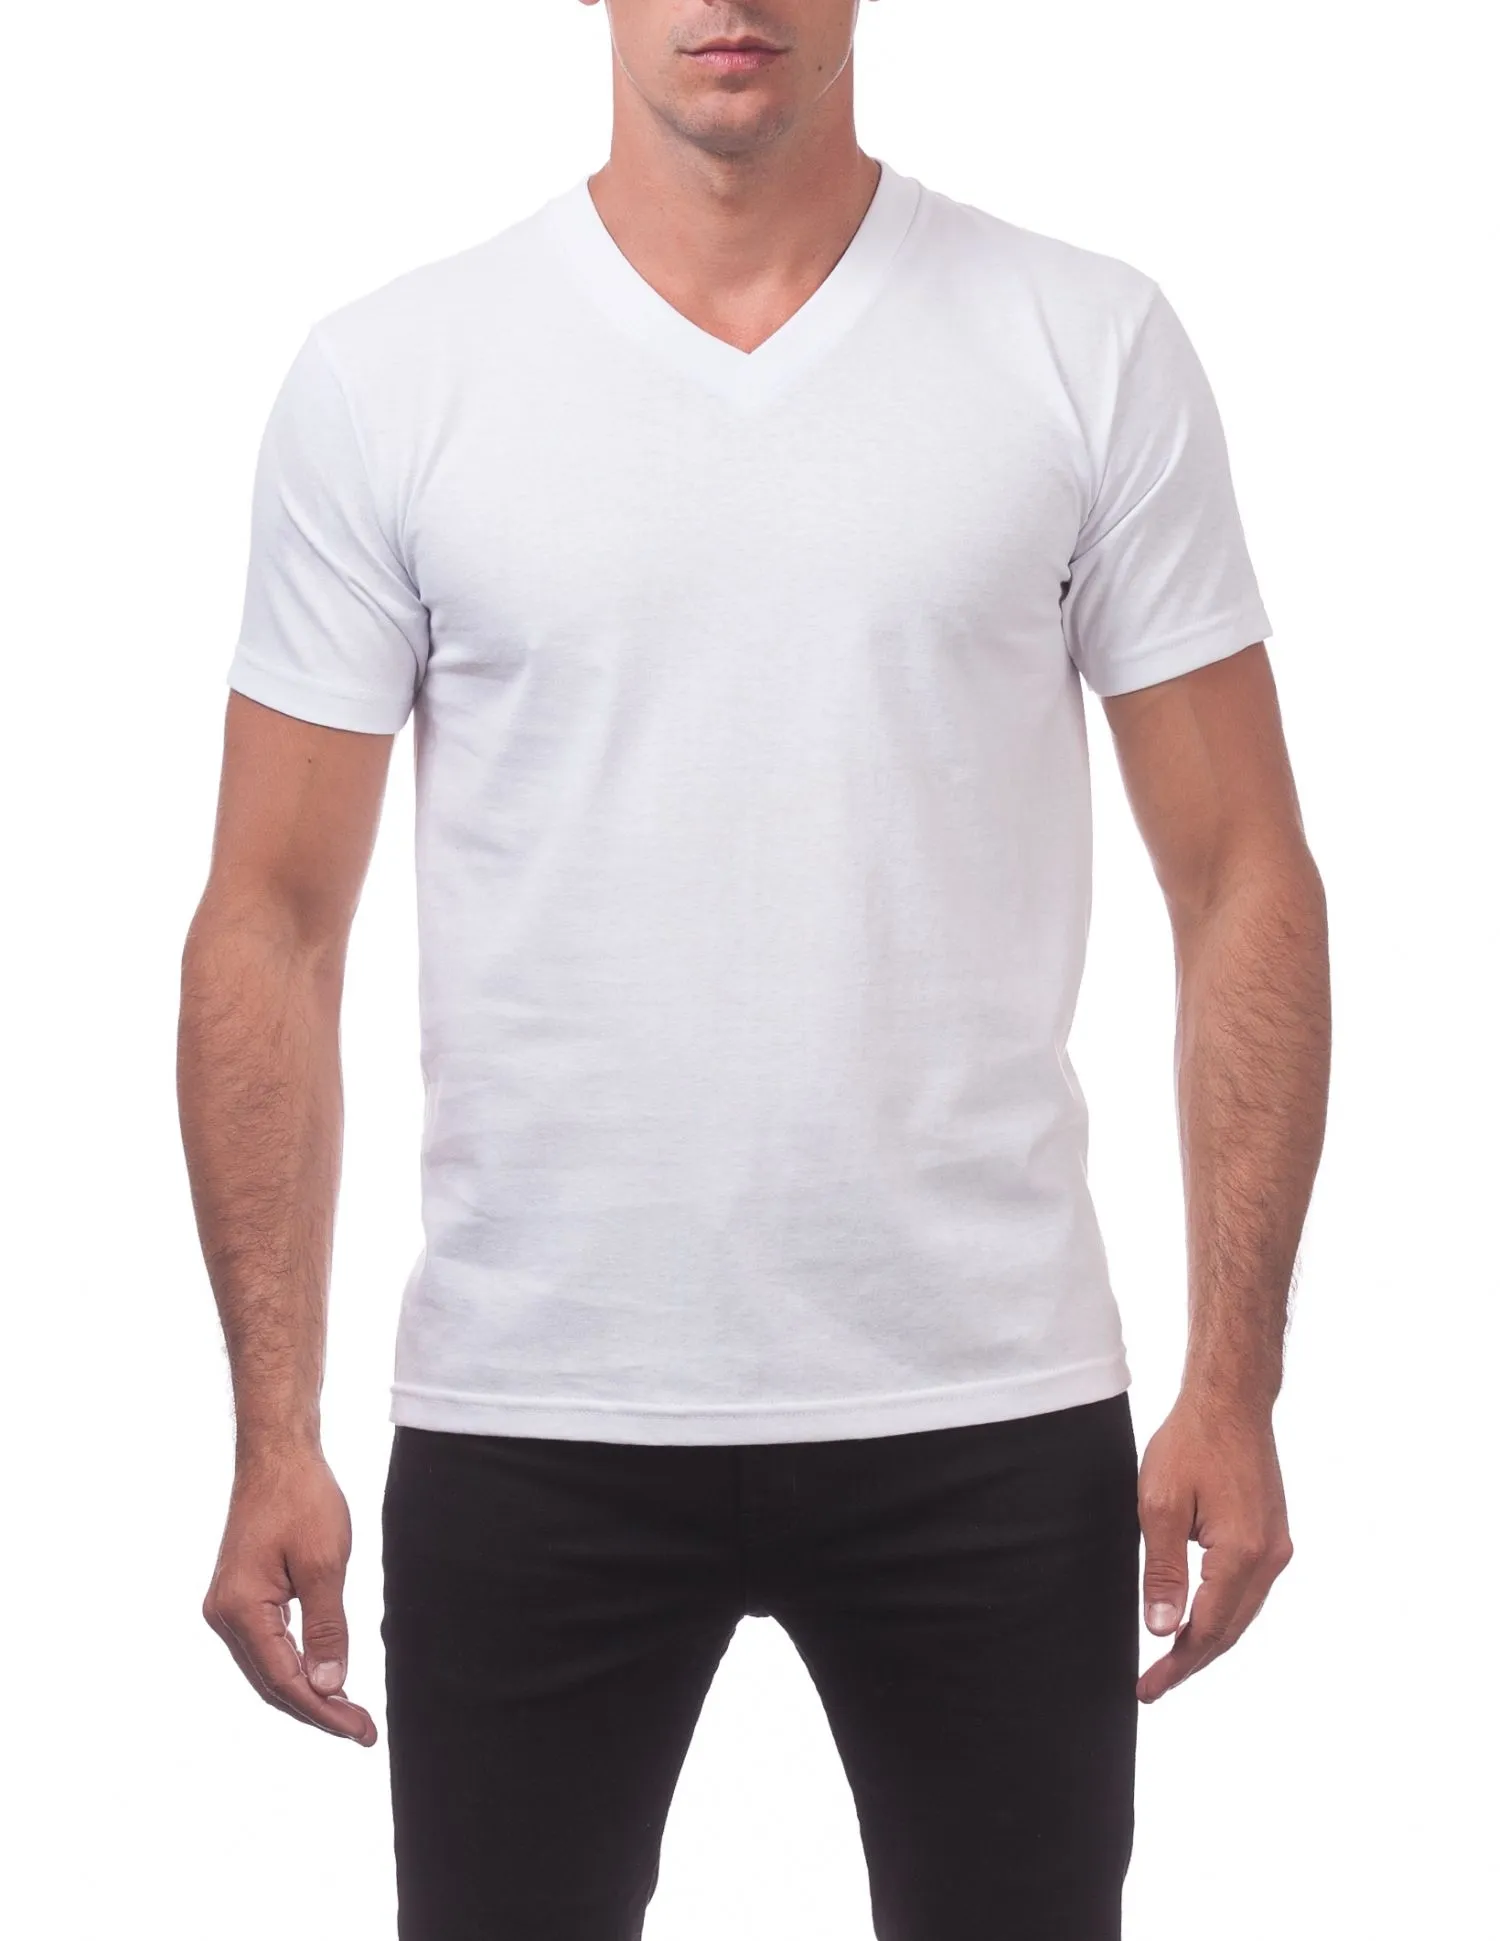 Toptan yüksek kaliteli % 100% organik pamuk erkek V boyun T shirt boş özel V boyun T shirt